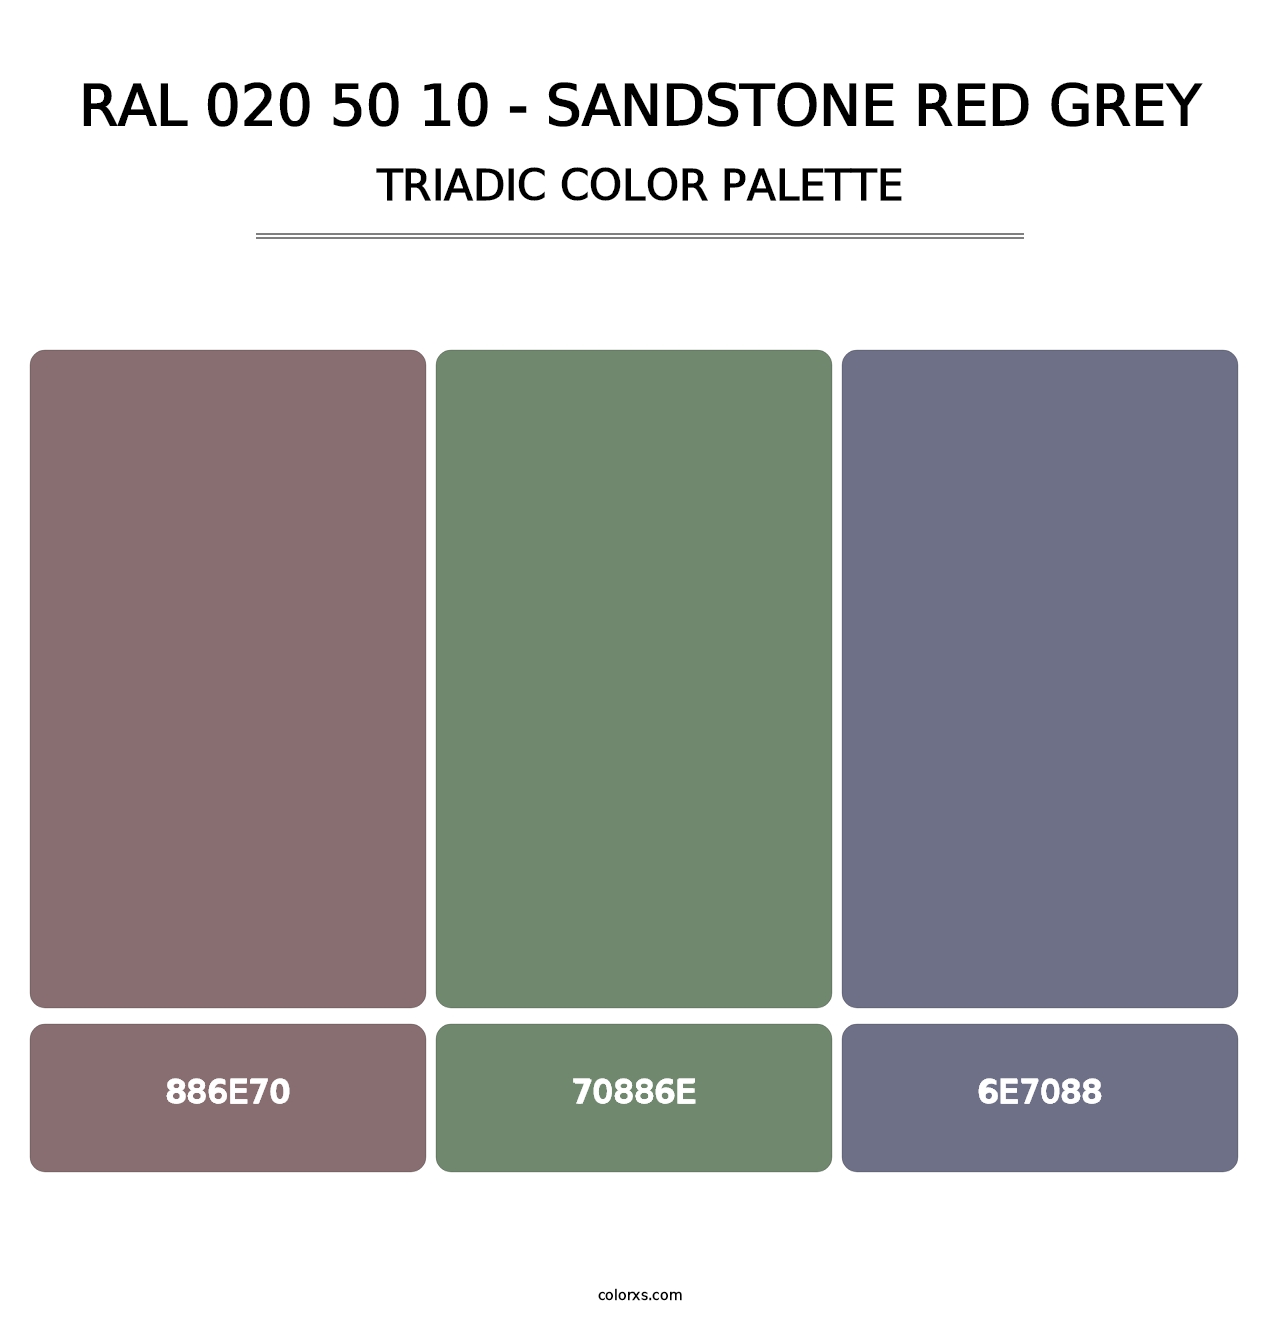 RAL 020 50 10 - Sandstone Red Grey - Triadic Color Palette